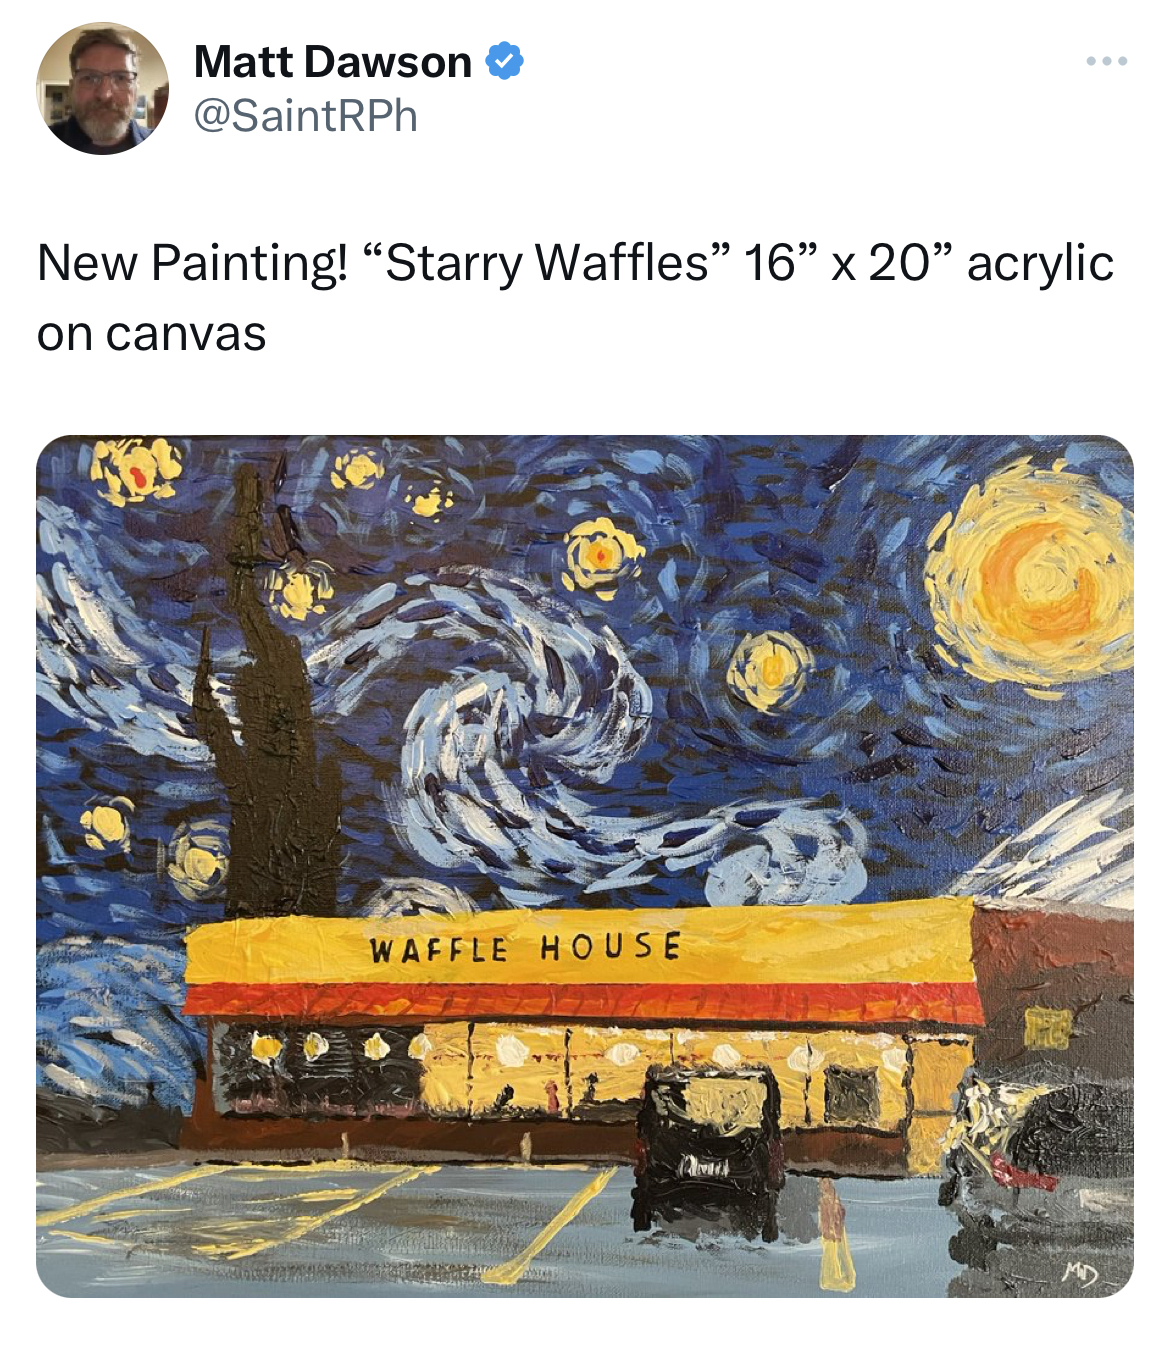 savage tweets - poster - Matt Dawson New Painting! "Starry Waffles" 16" x 20" acrylic on canvas Waffle House